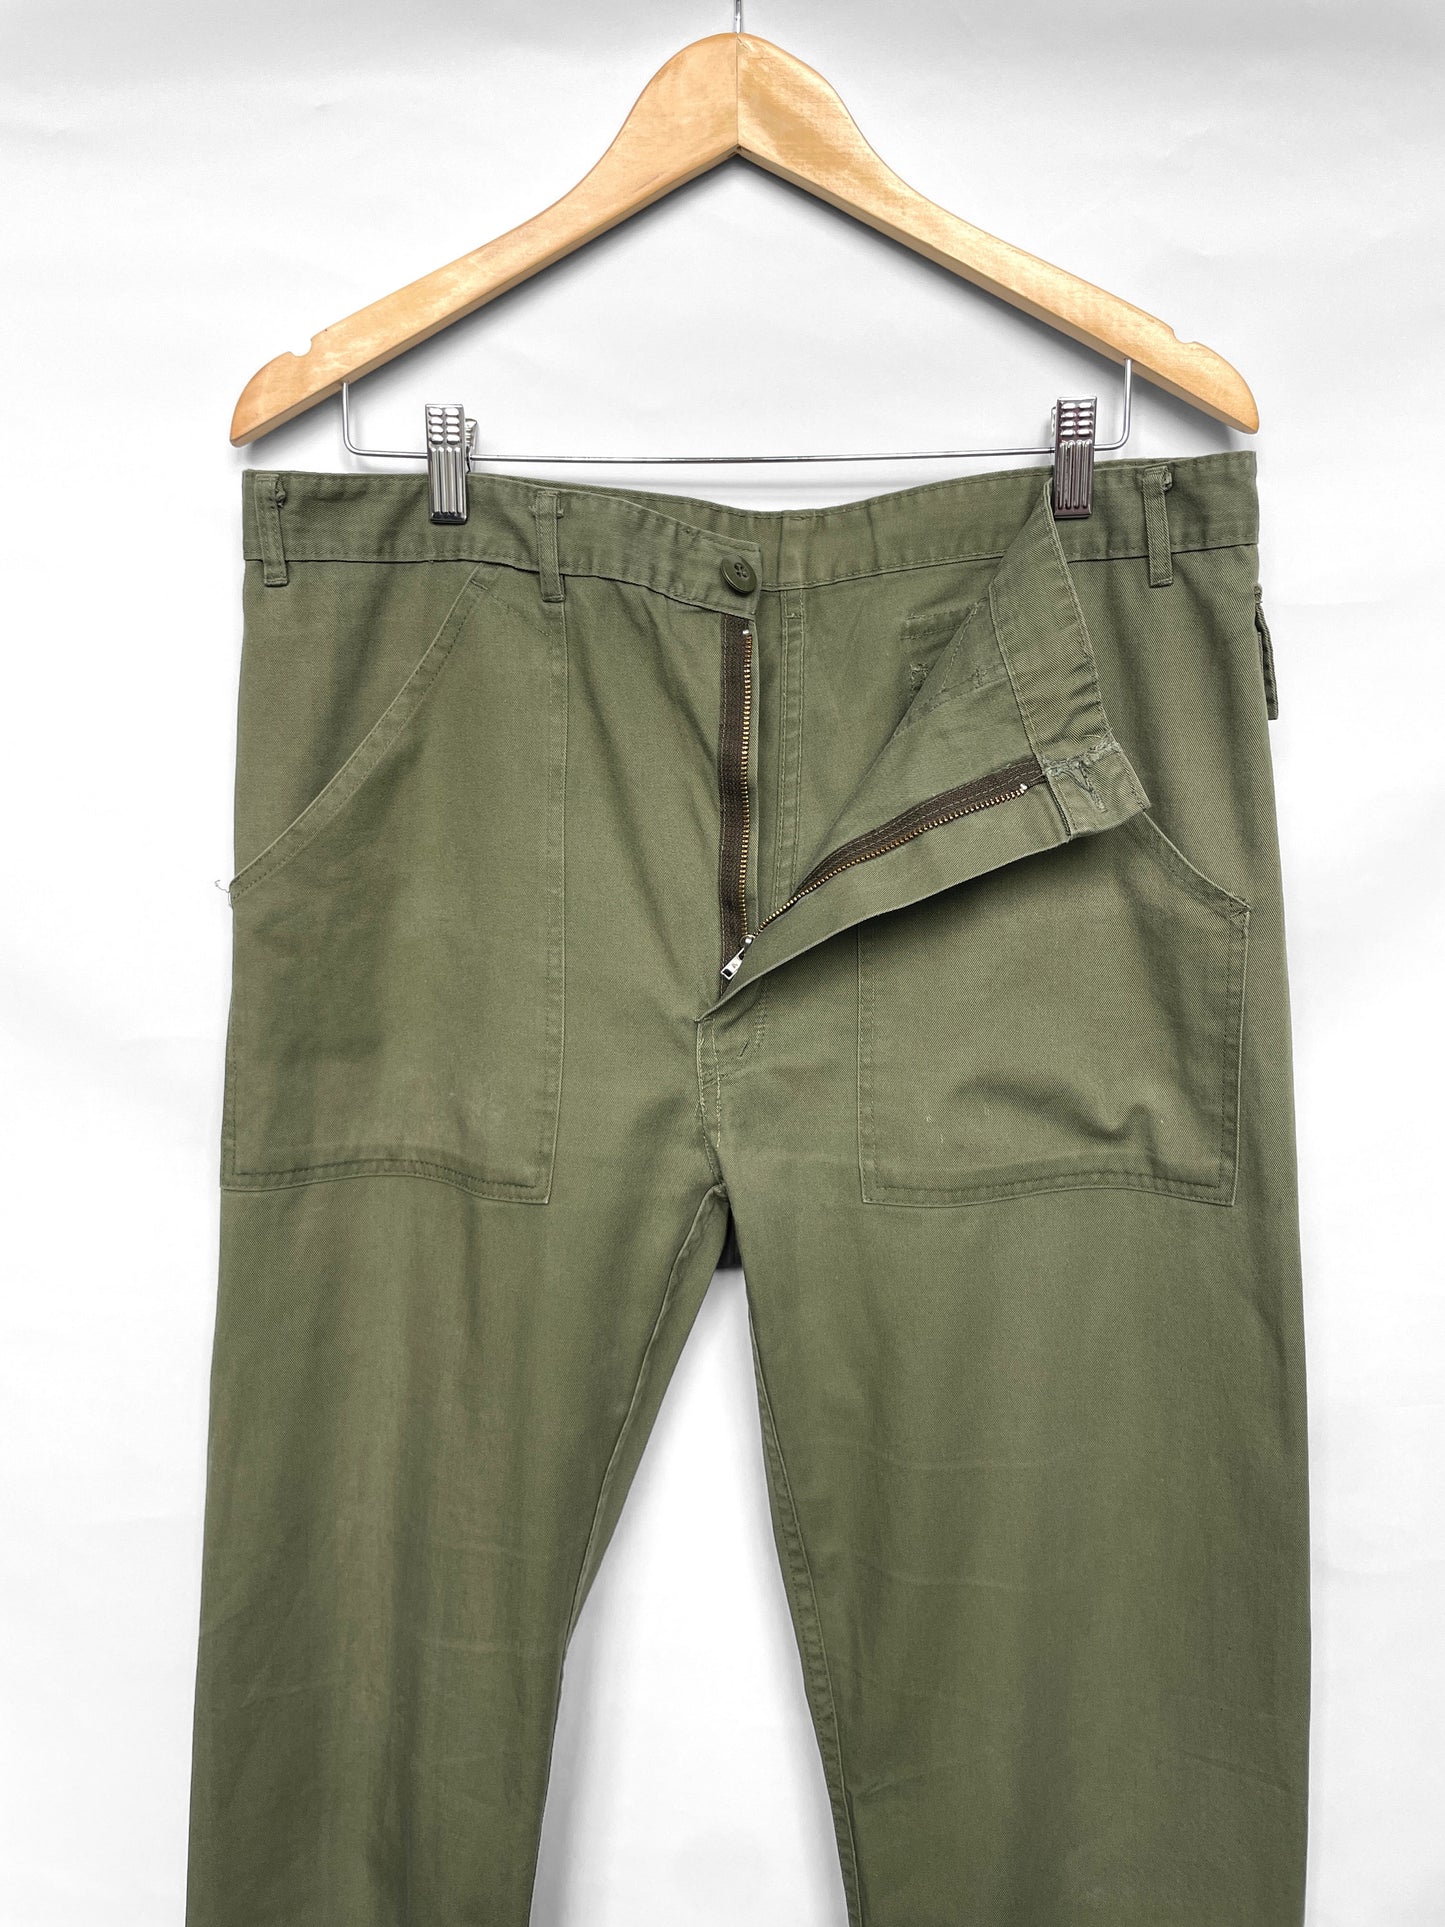 Vintage Soft German Army Trousers